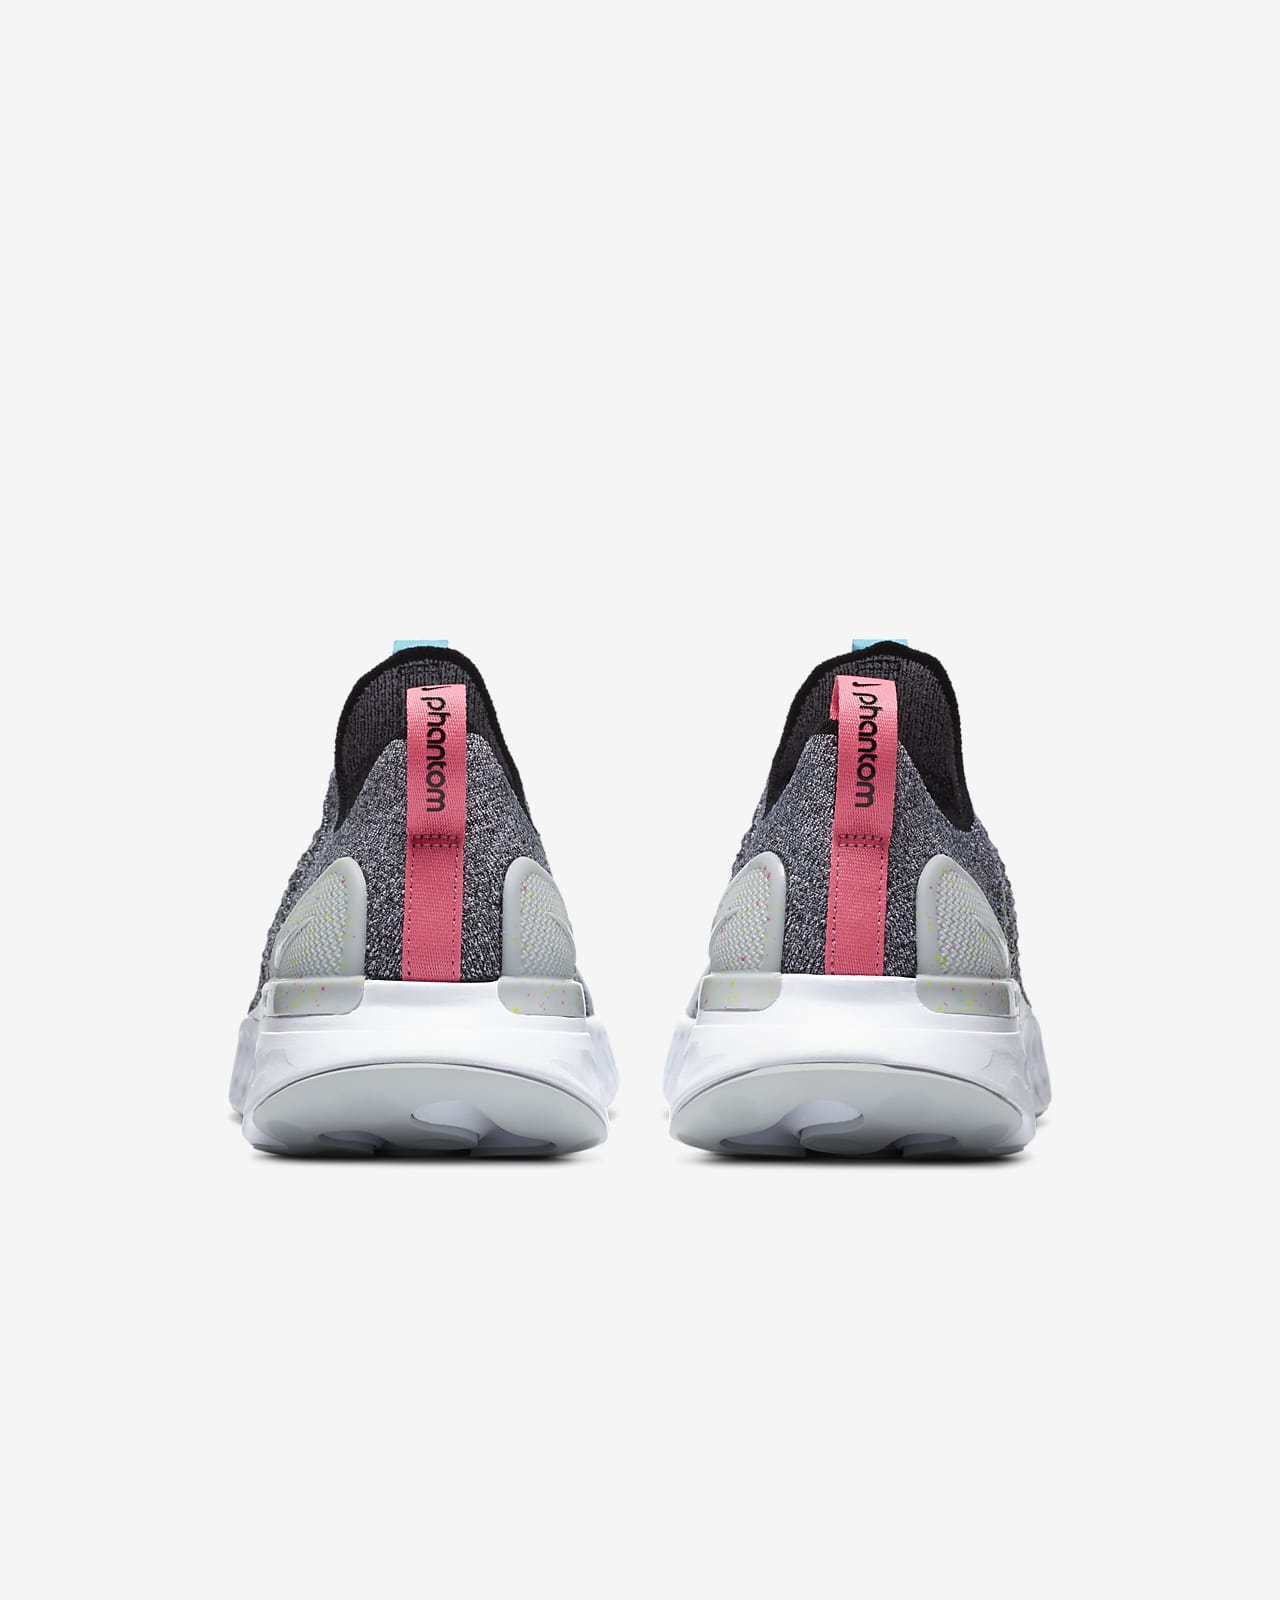 Nike Men's React Phantom Run Flyknit 2 Running Shoes, Size 11.5, White/Blue